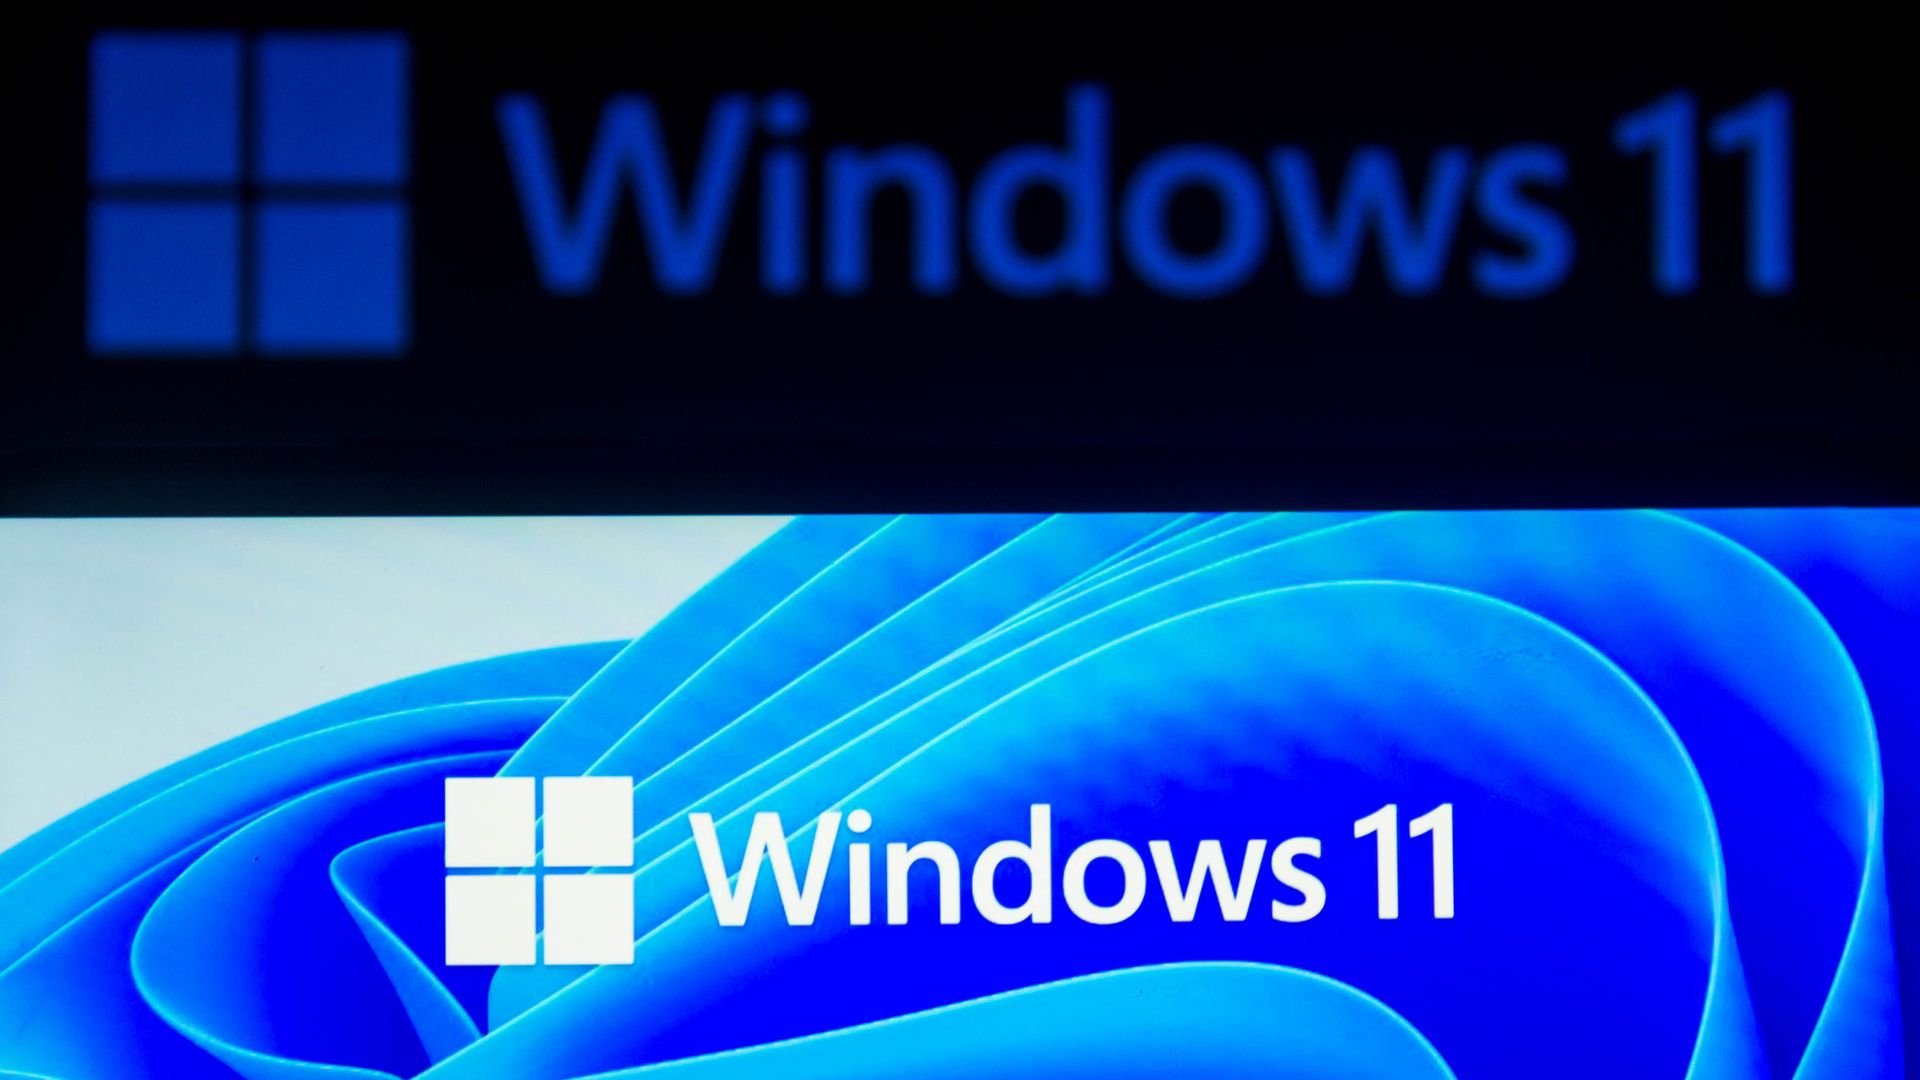 Get ready for Microsoft's Windows 11 media blitz